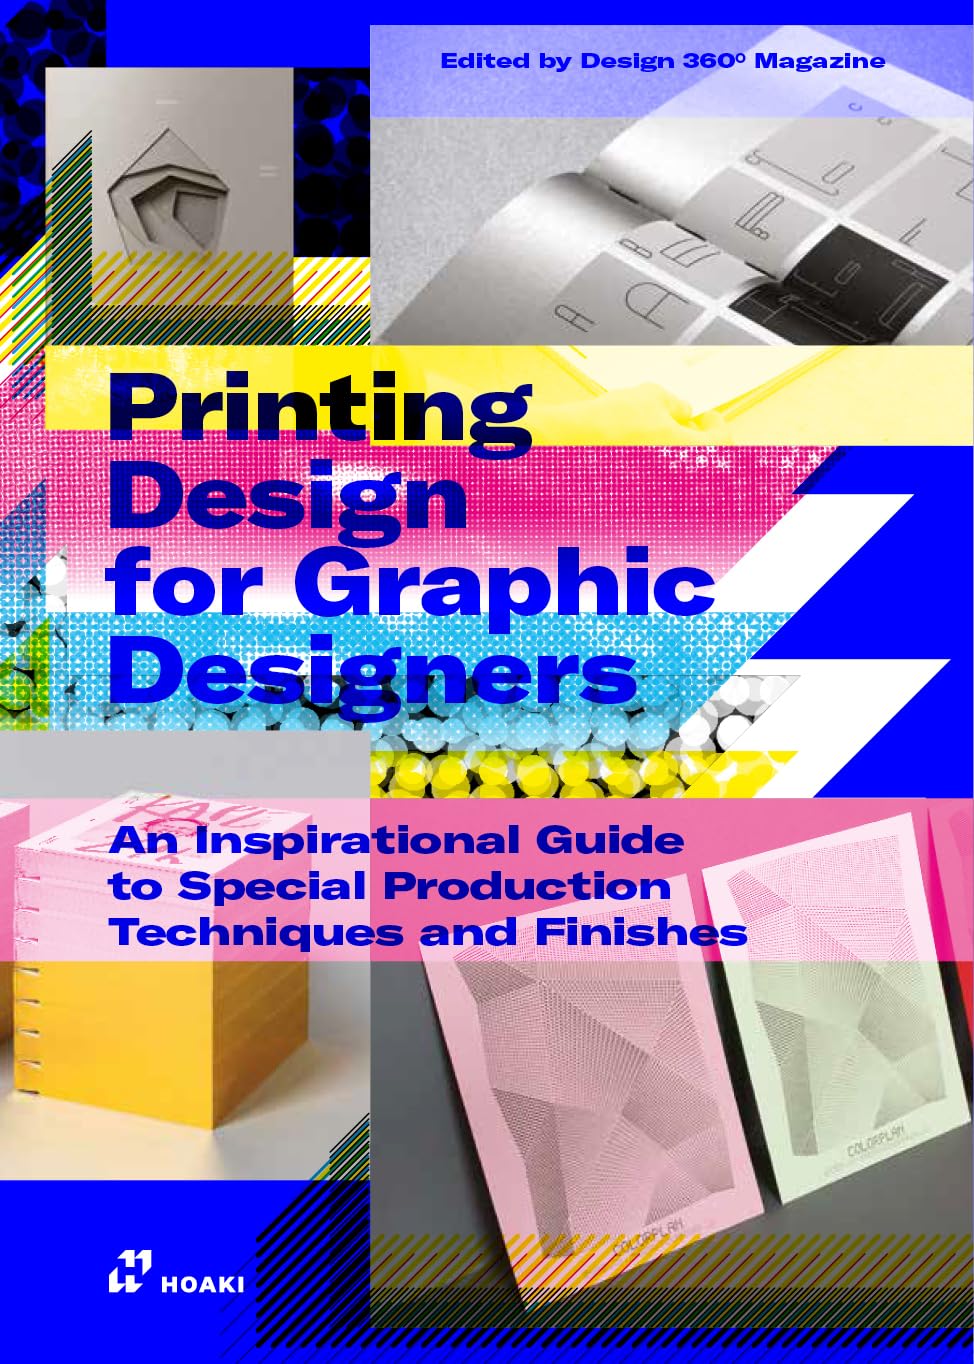 Designs for Graphic Designers